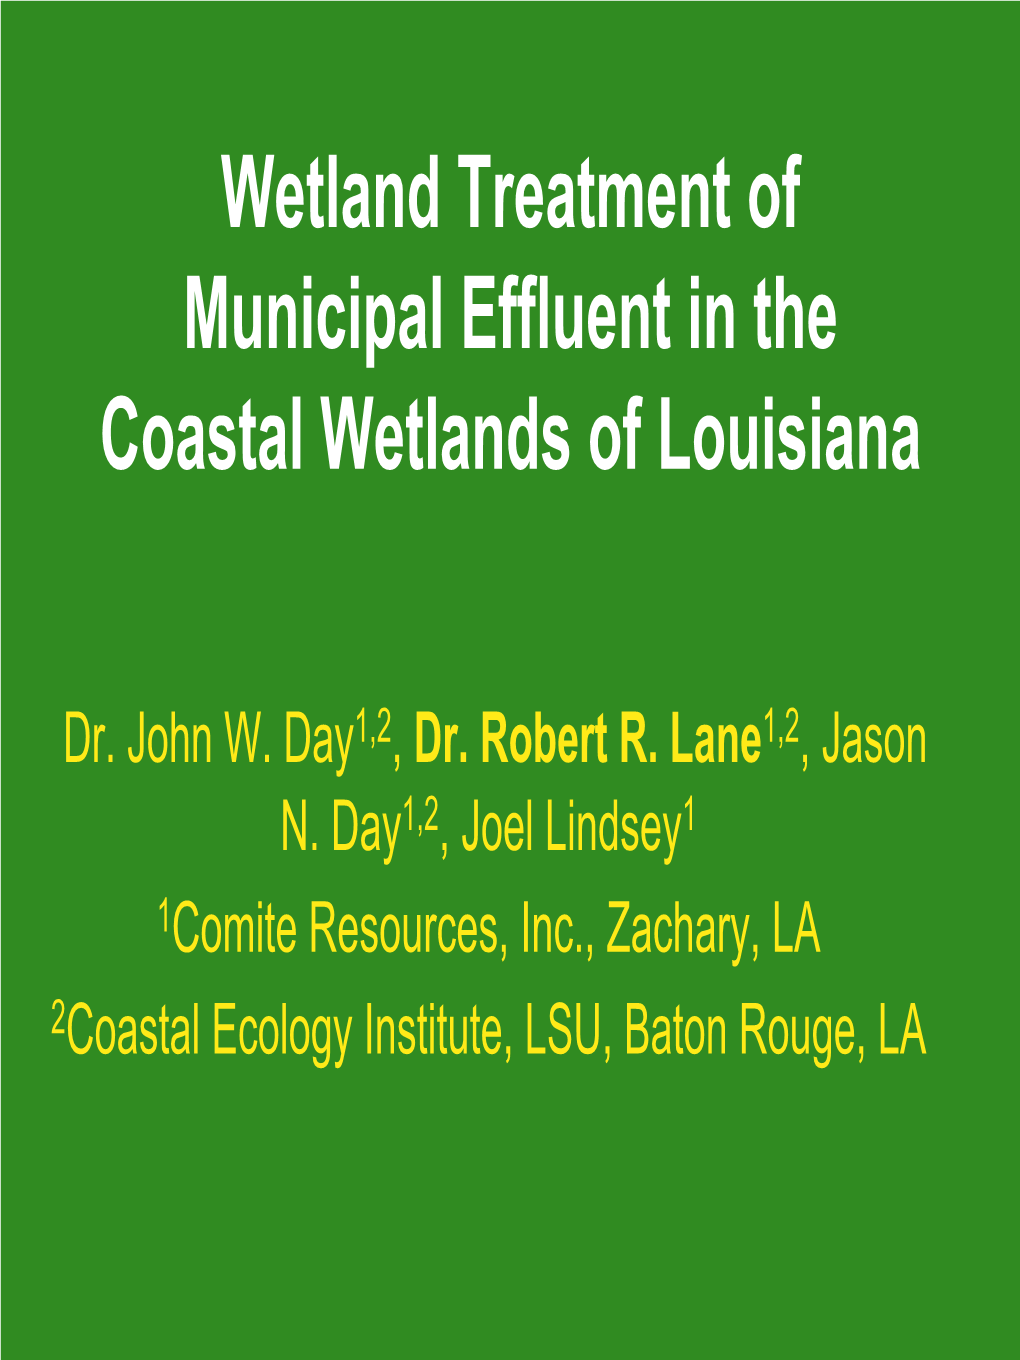 Wetland Treatment of Municipal Effluent in the Coastal Wetlands of Louisiana